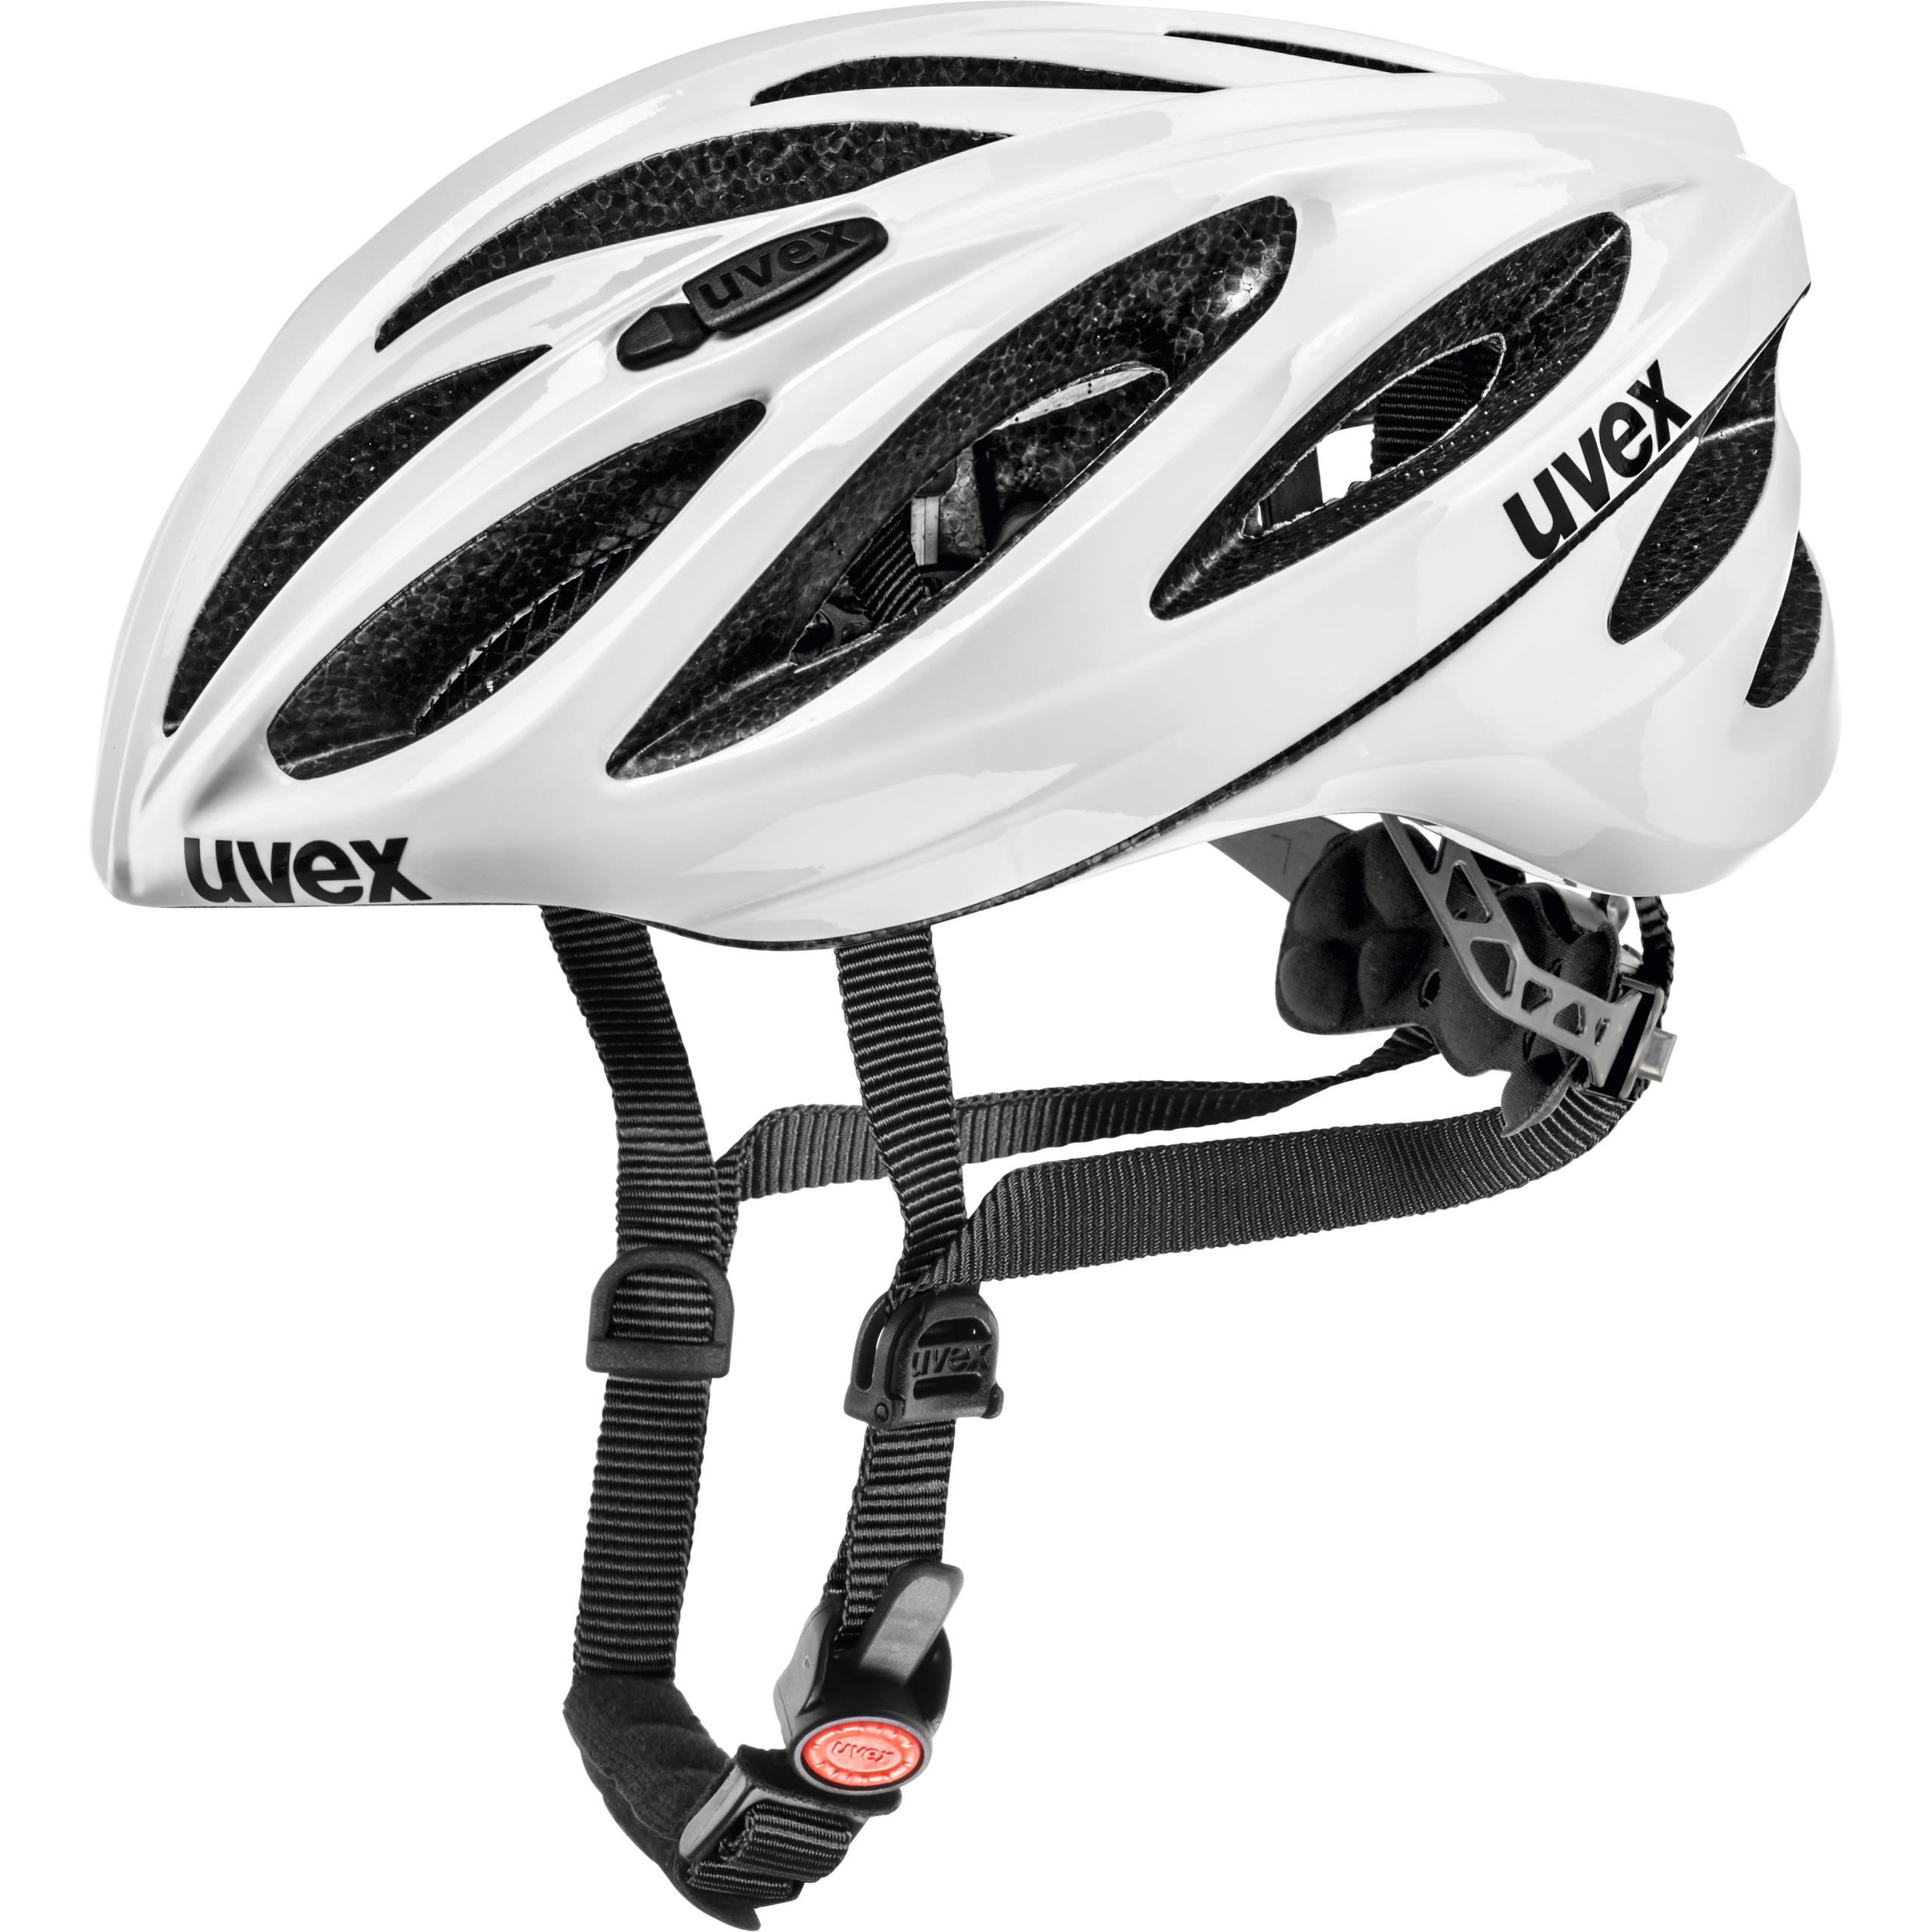 nuevo en embalaje original! Casco de bicicleta-UVEX Boss Race White//Silver 52-56cm